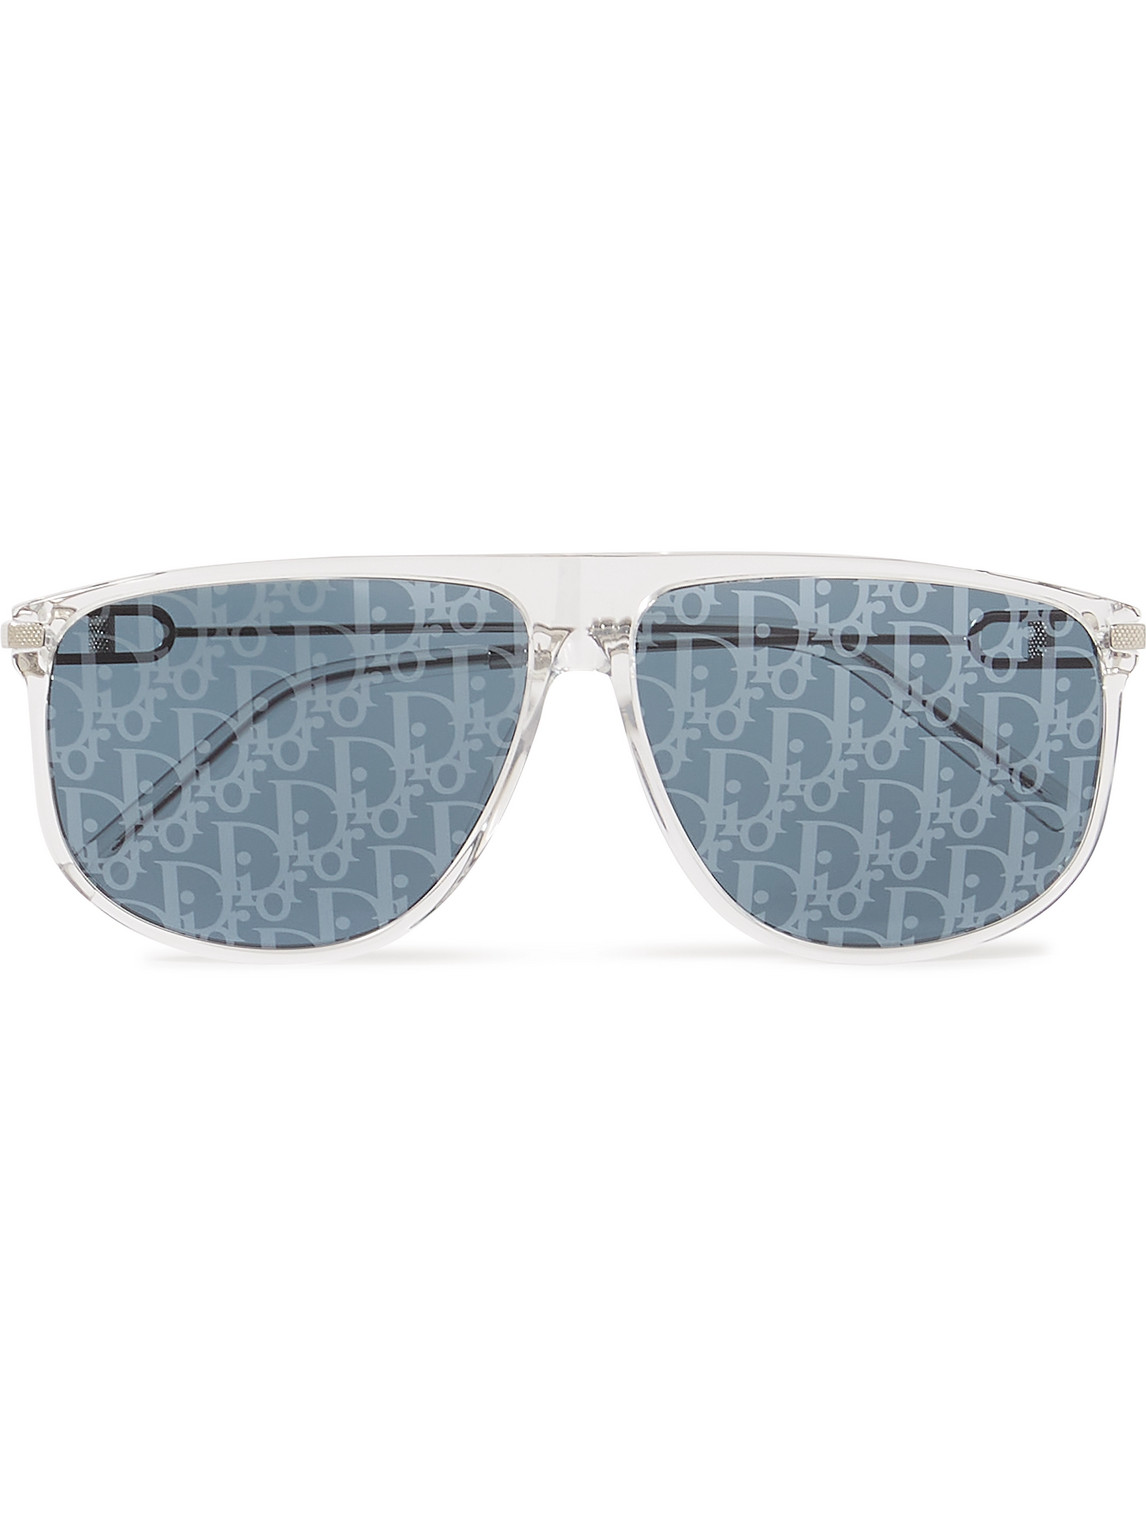 Dior Eyewear - CD Link S2U D-Frame Acetate and Silver-Tone Mirrored Sunglasses - Men - Silver von Dior Eyewear